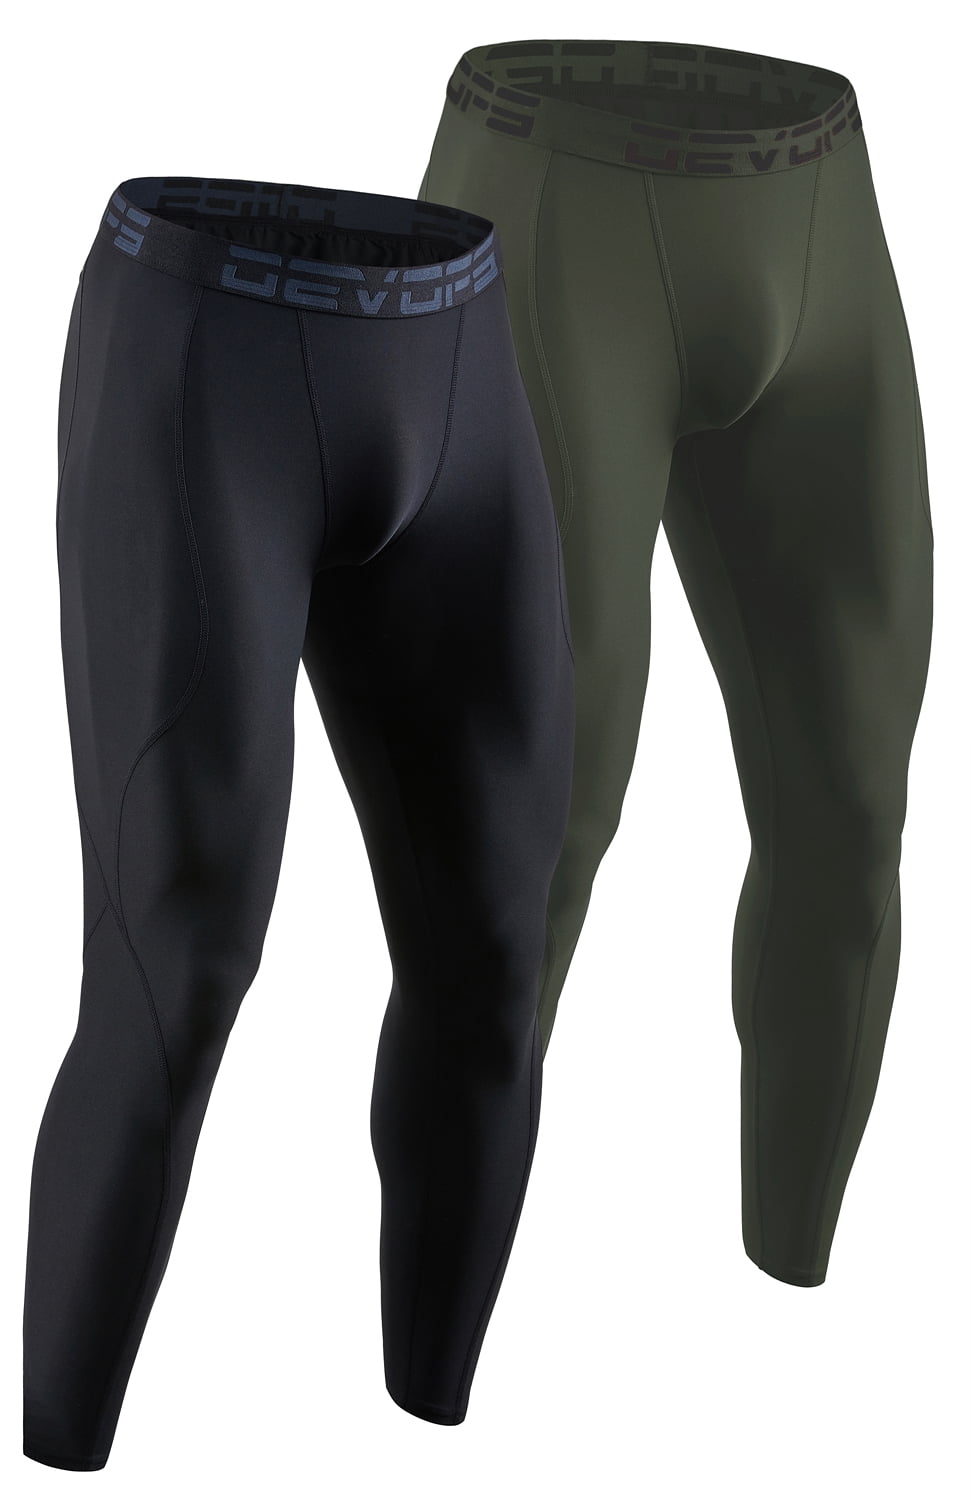 DEVOPS 2 Pack Men's Compression Pants Athletic Leggings (Medium,  Black/Navy) 